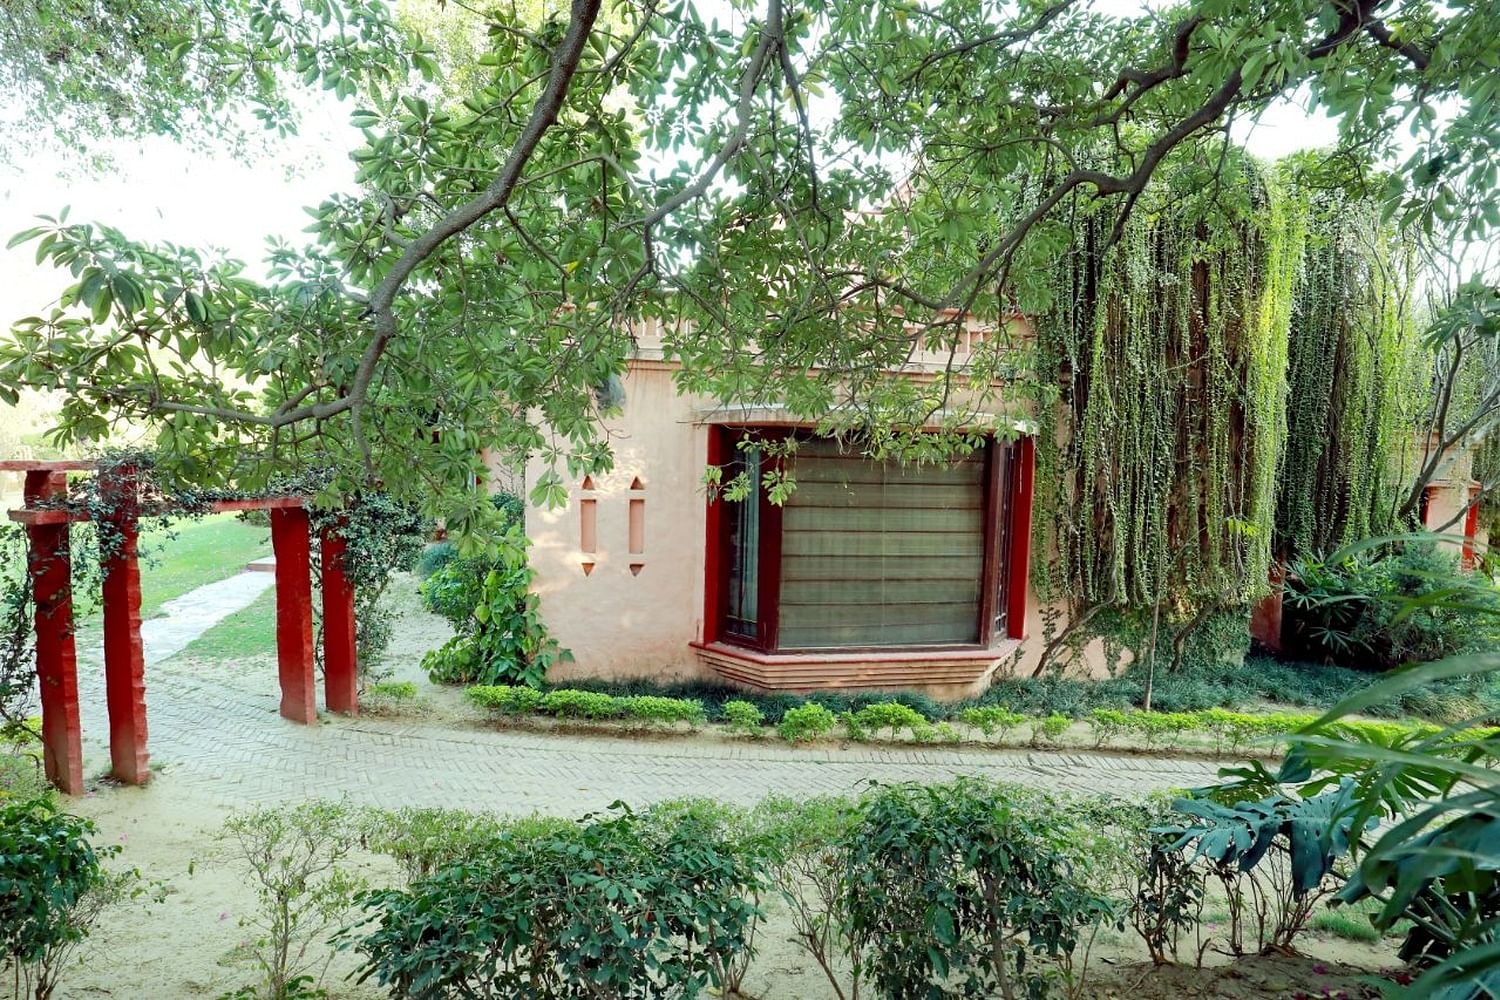 The Singhania Farm in Chattarpur, Delhi